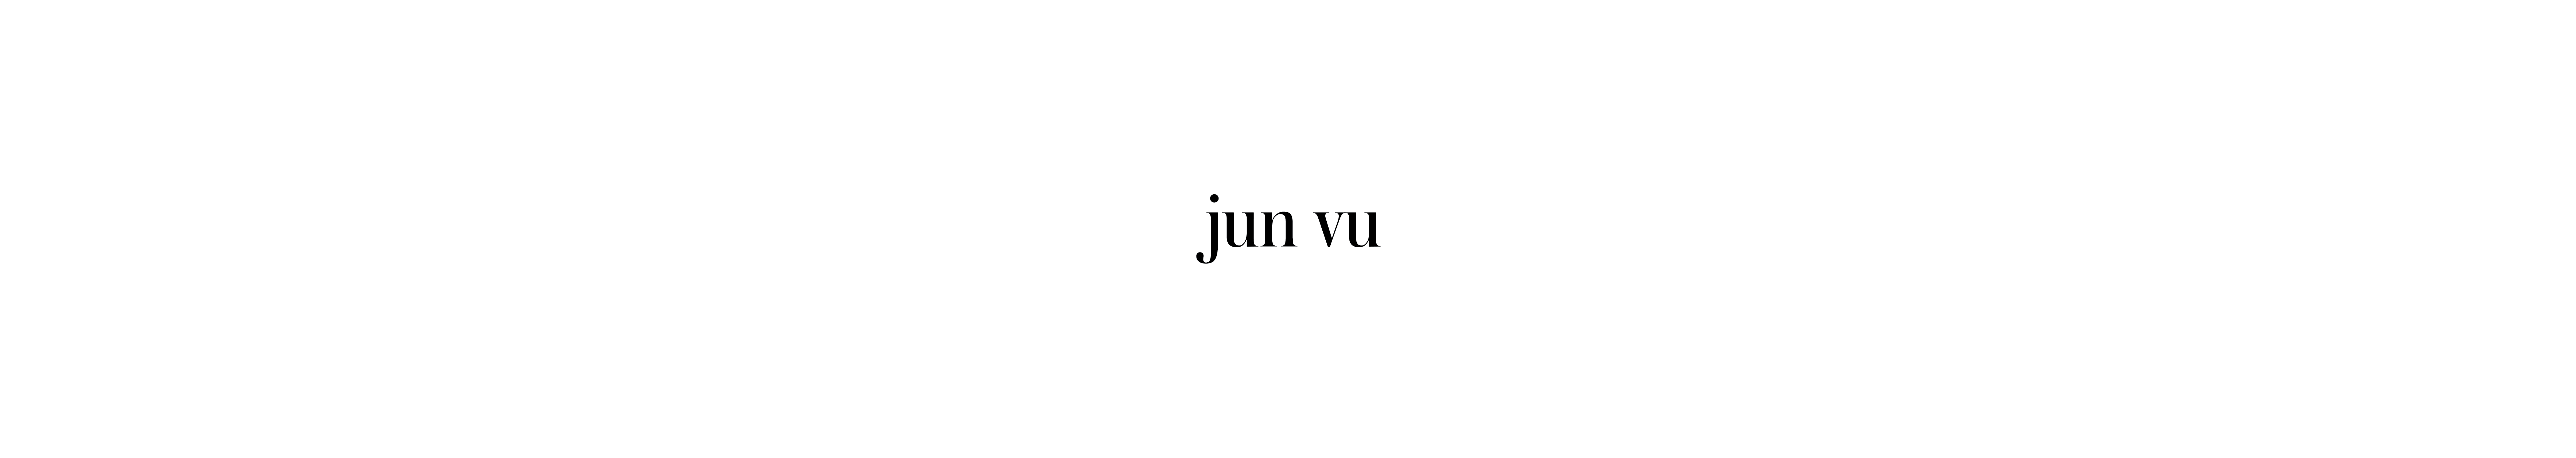 Jun Vu profil başlığı